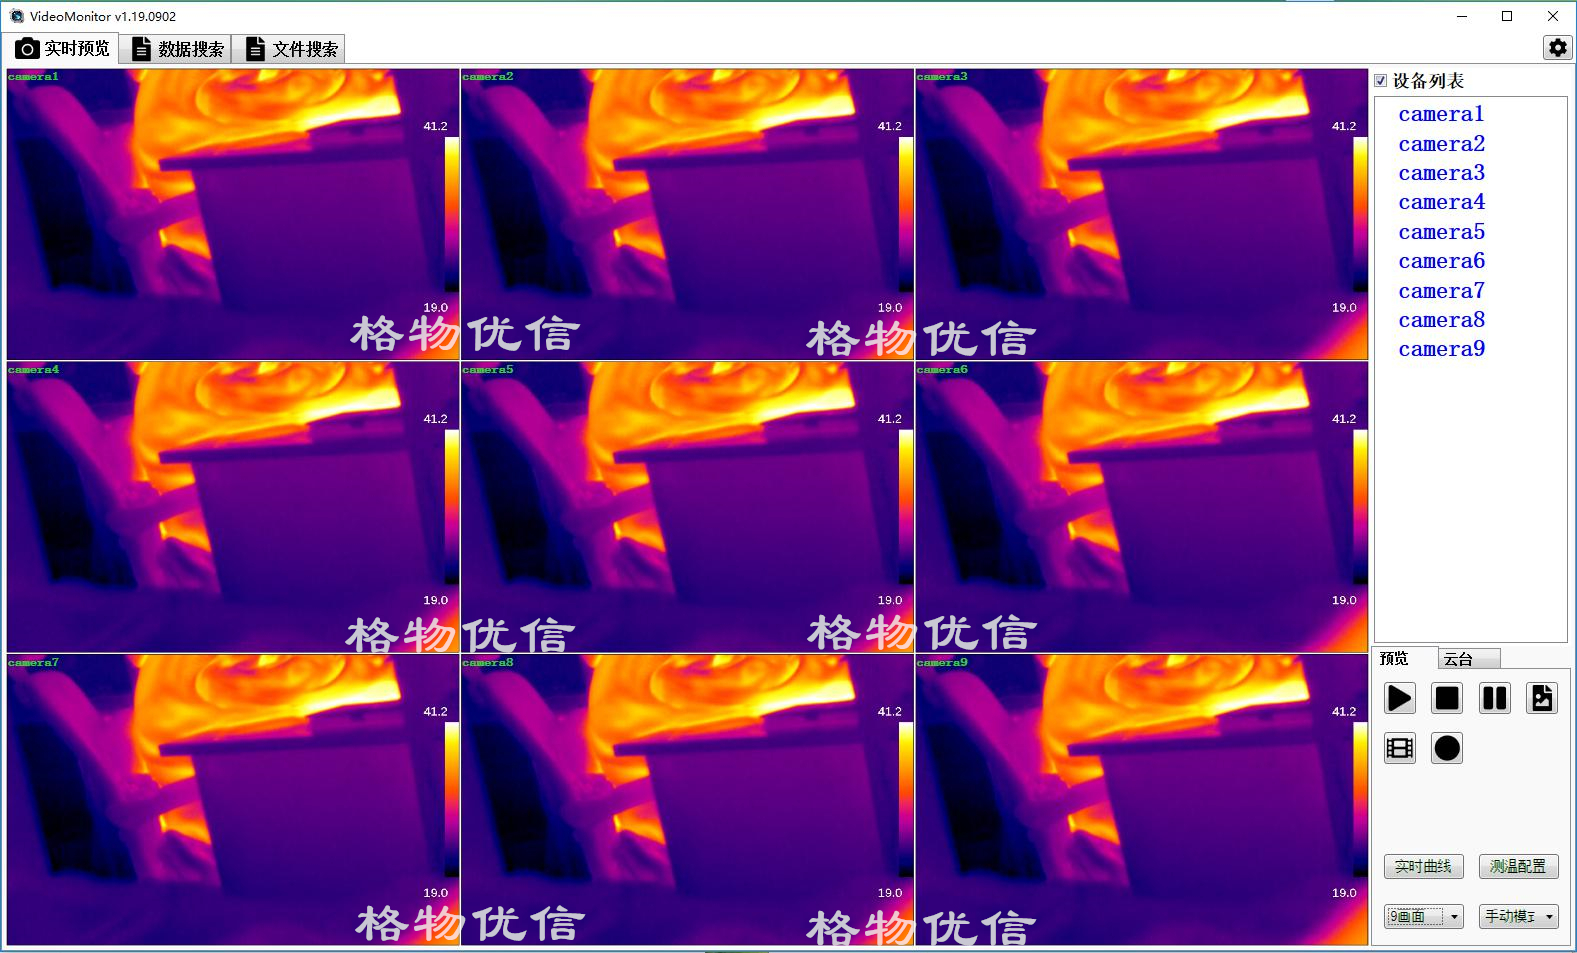 Battery Warehouse thermal imaging Monitoring